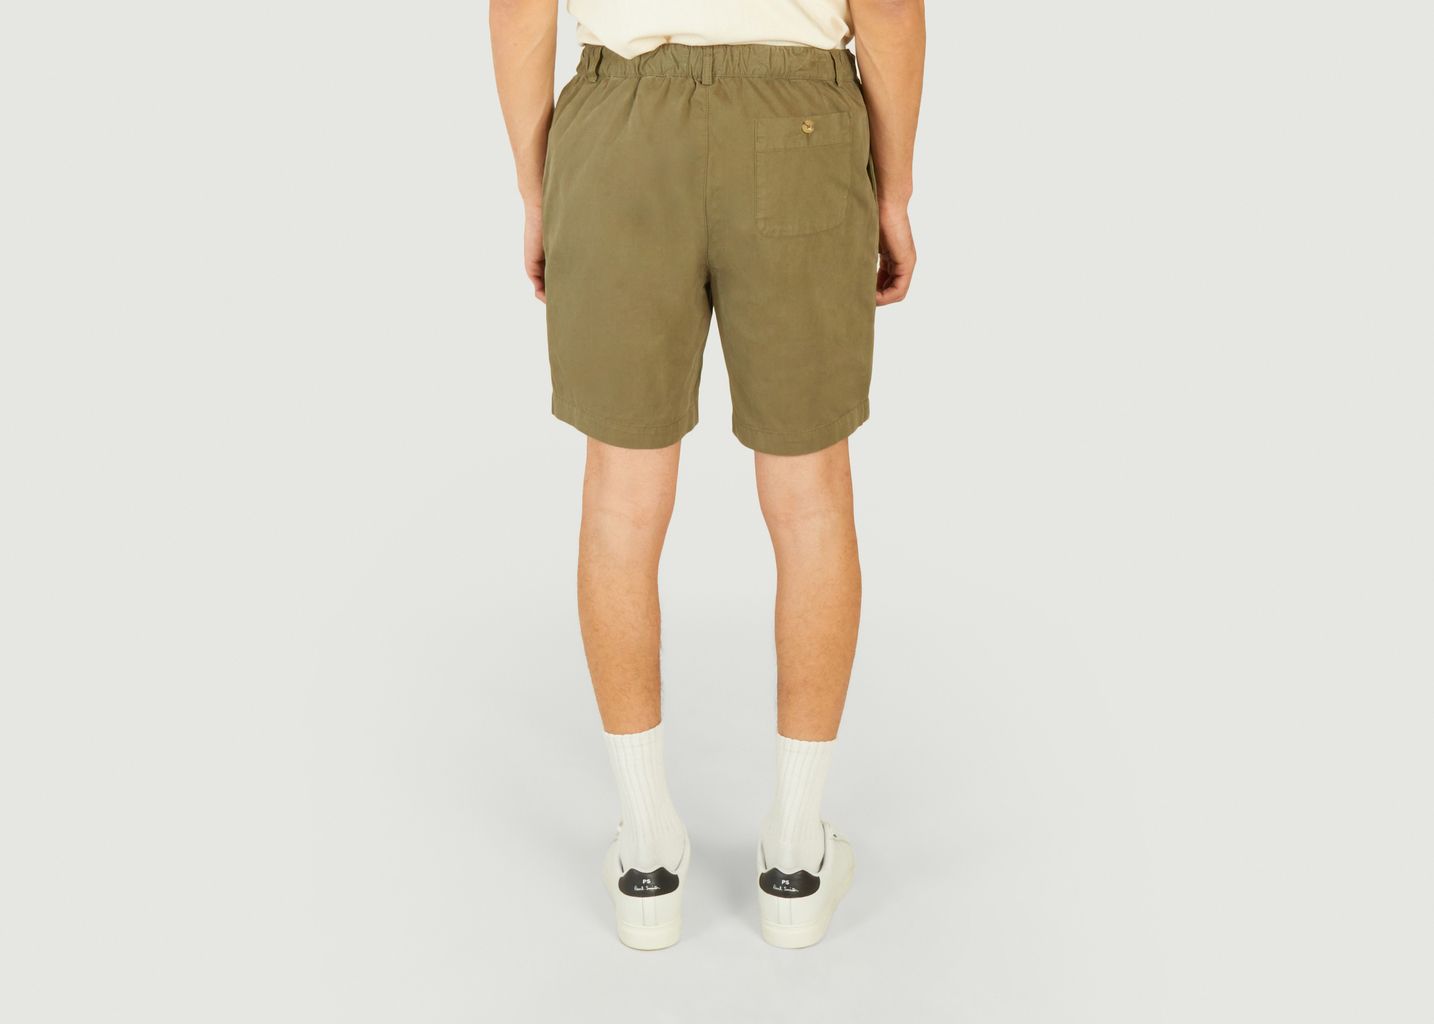 Inverness shorts - KESTIN